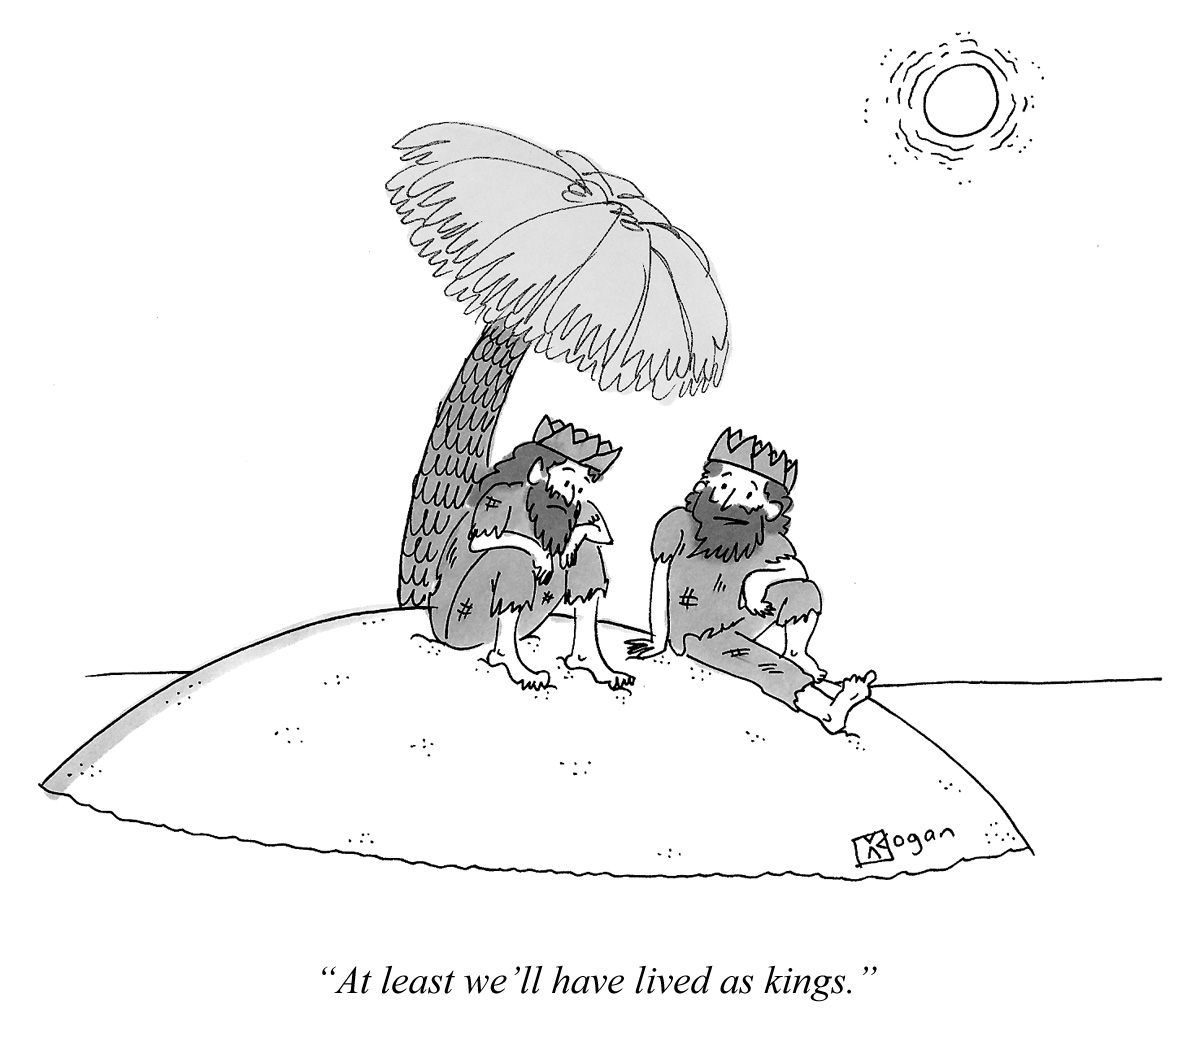 Cartoon about living as kings on a desert island.